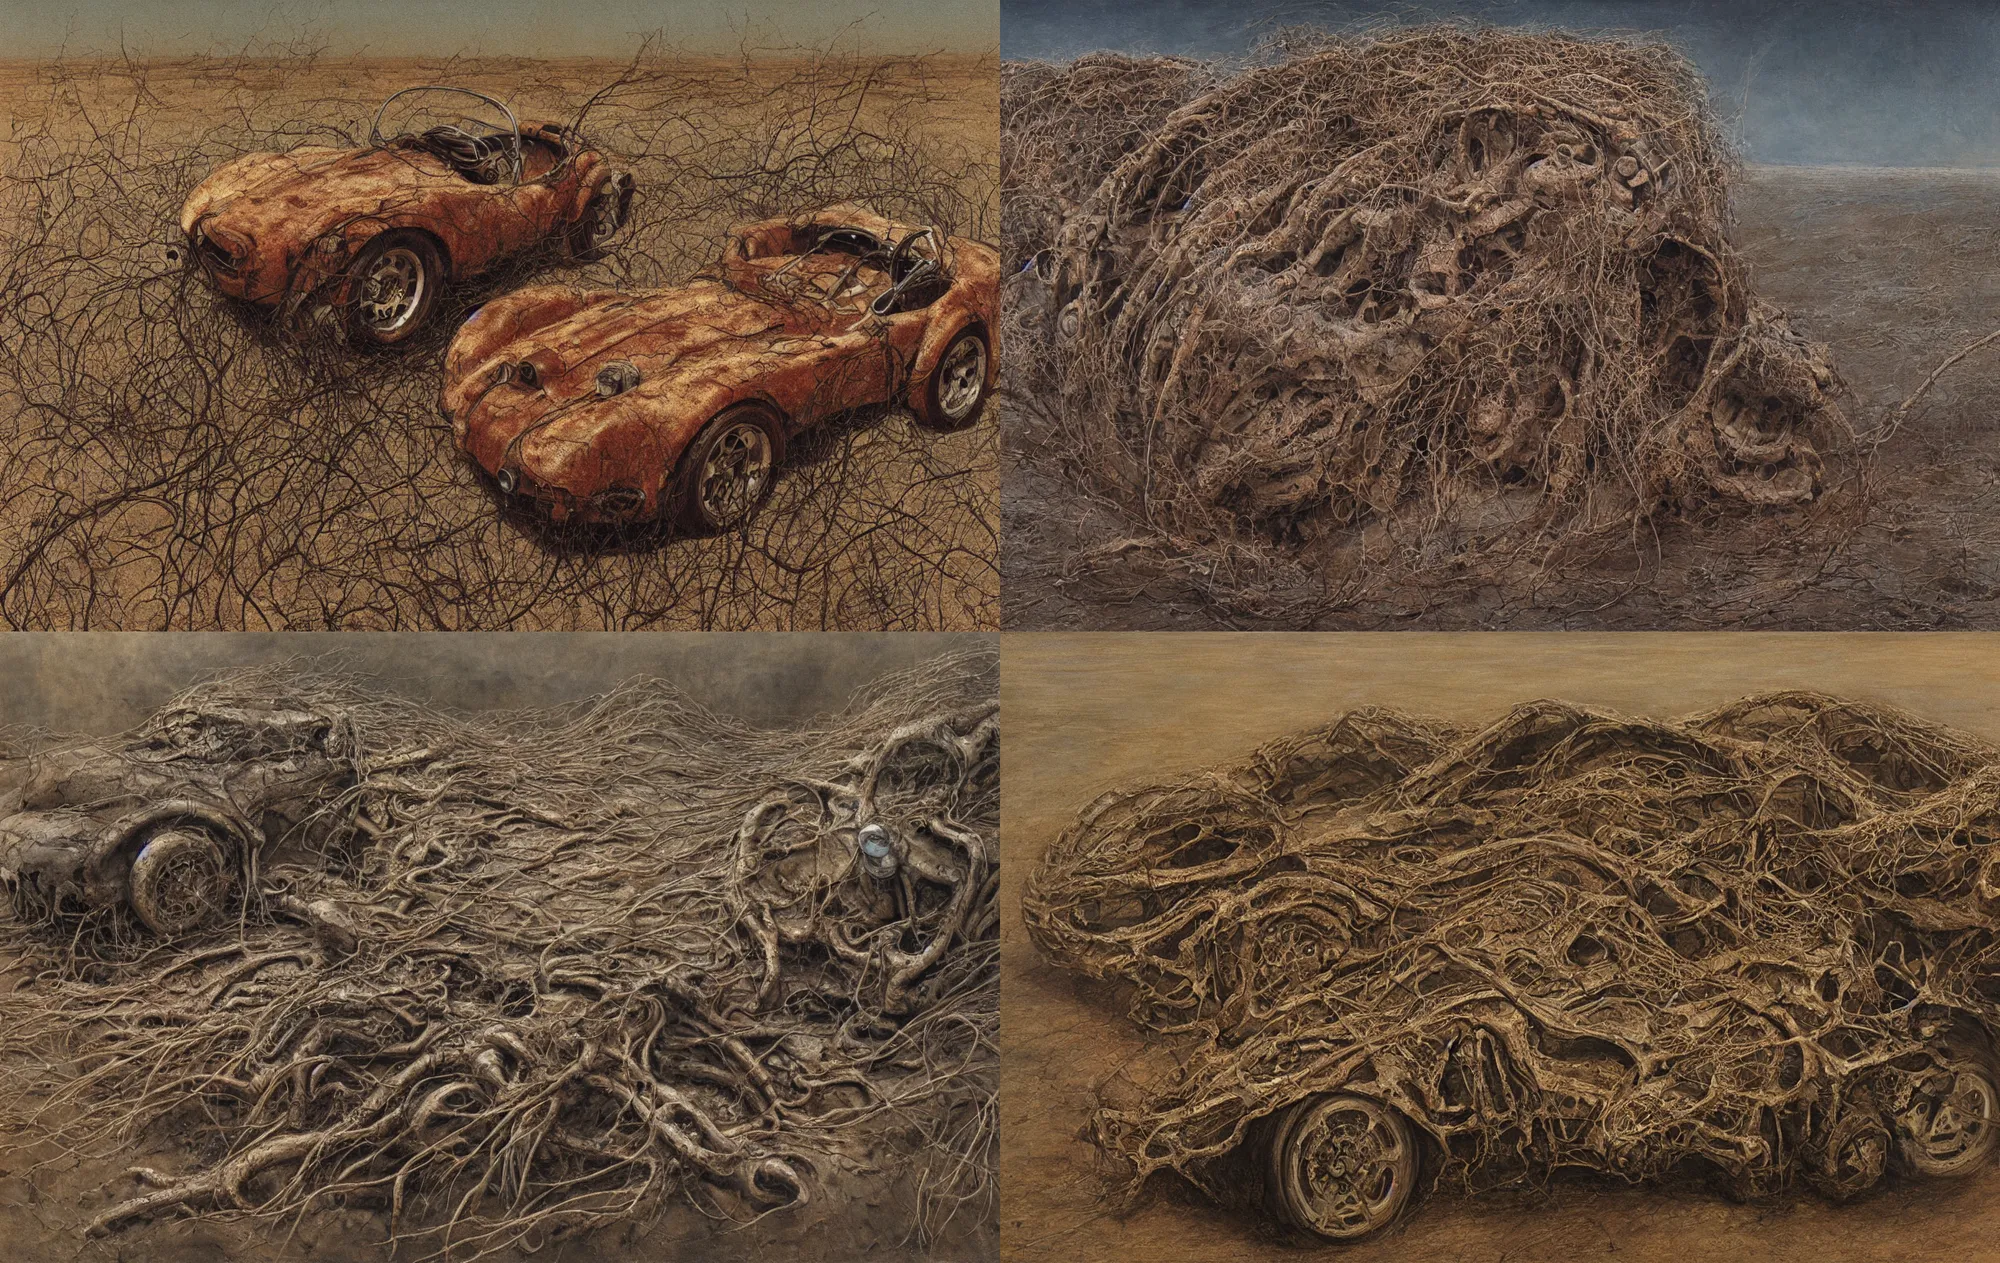 Prompt: closeup rusty shelby cobra, overgrown by weeds, desert, cracked dry lake bed, by beksinski, h.r giger, giger, Zdzislaw Beksinski, highly detailed, soft lighting, 8k resolution, oil on canvas